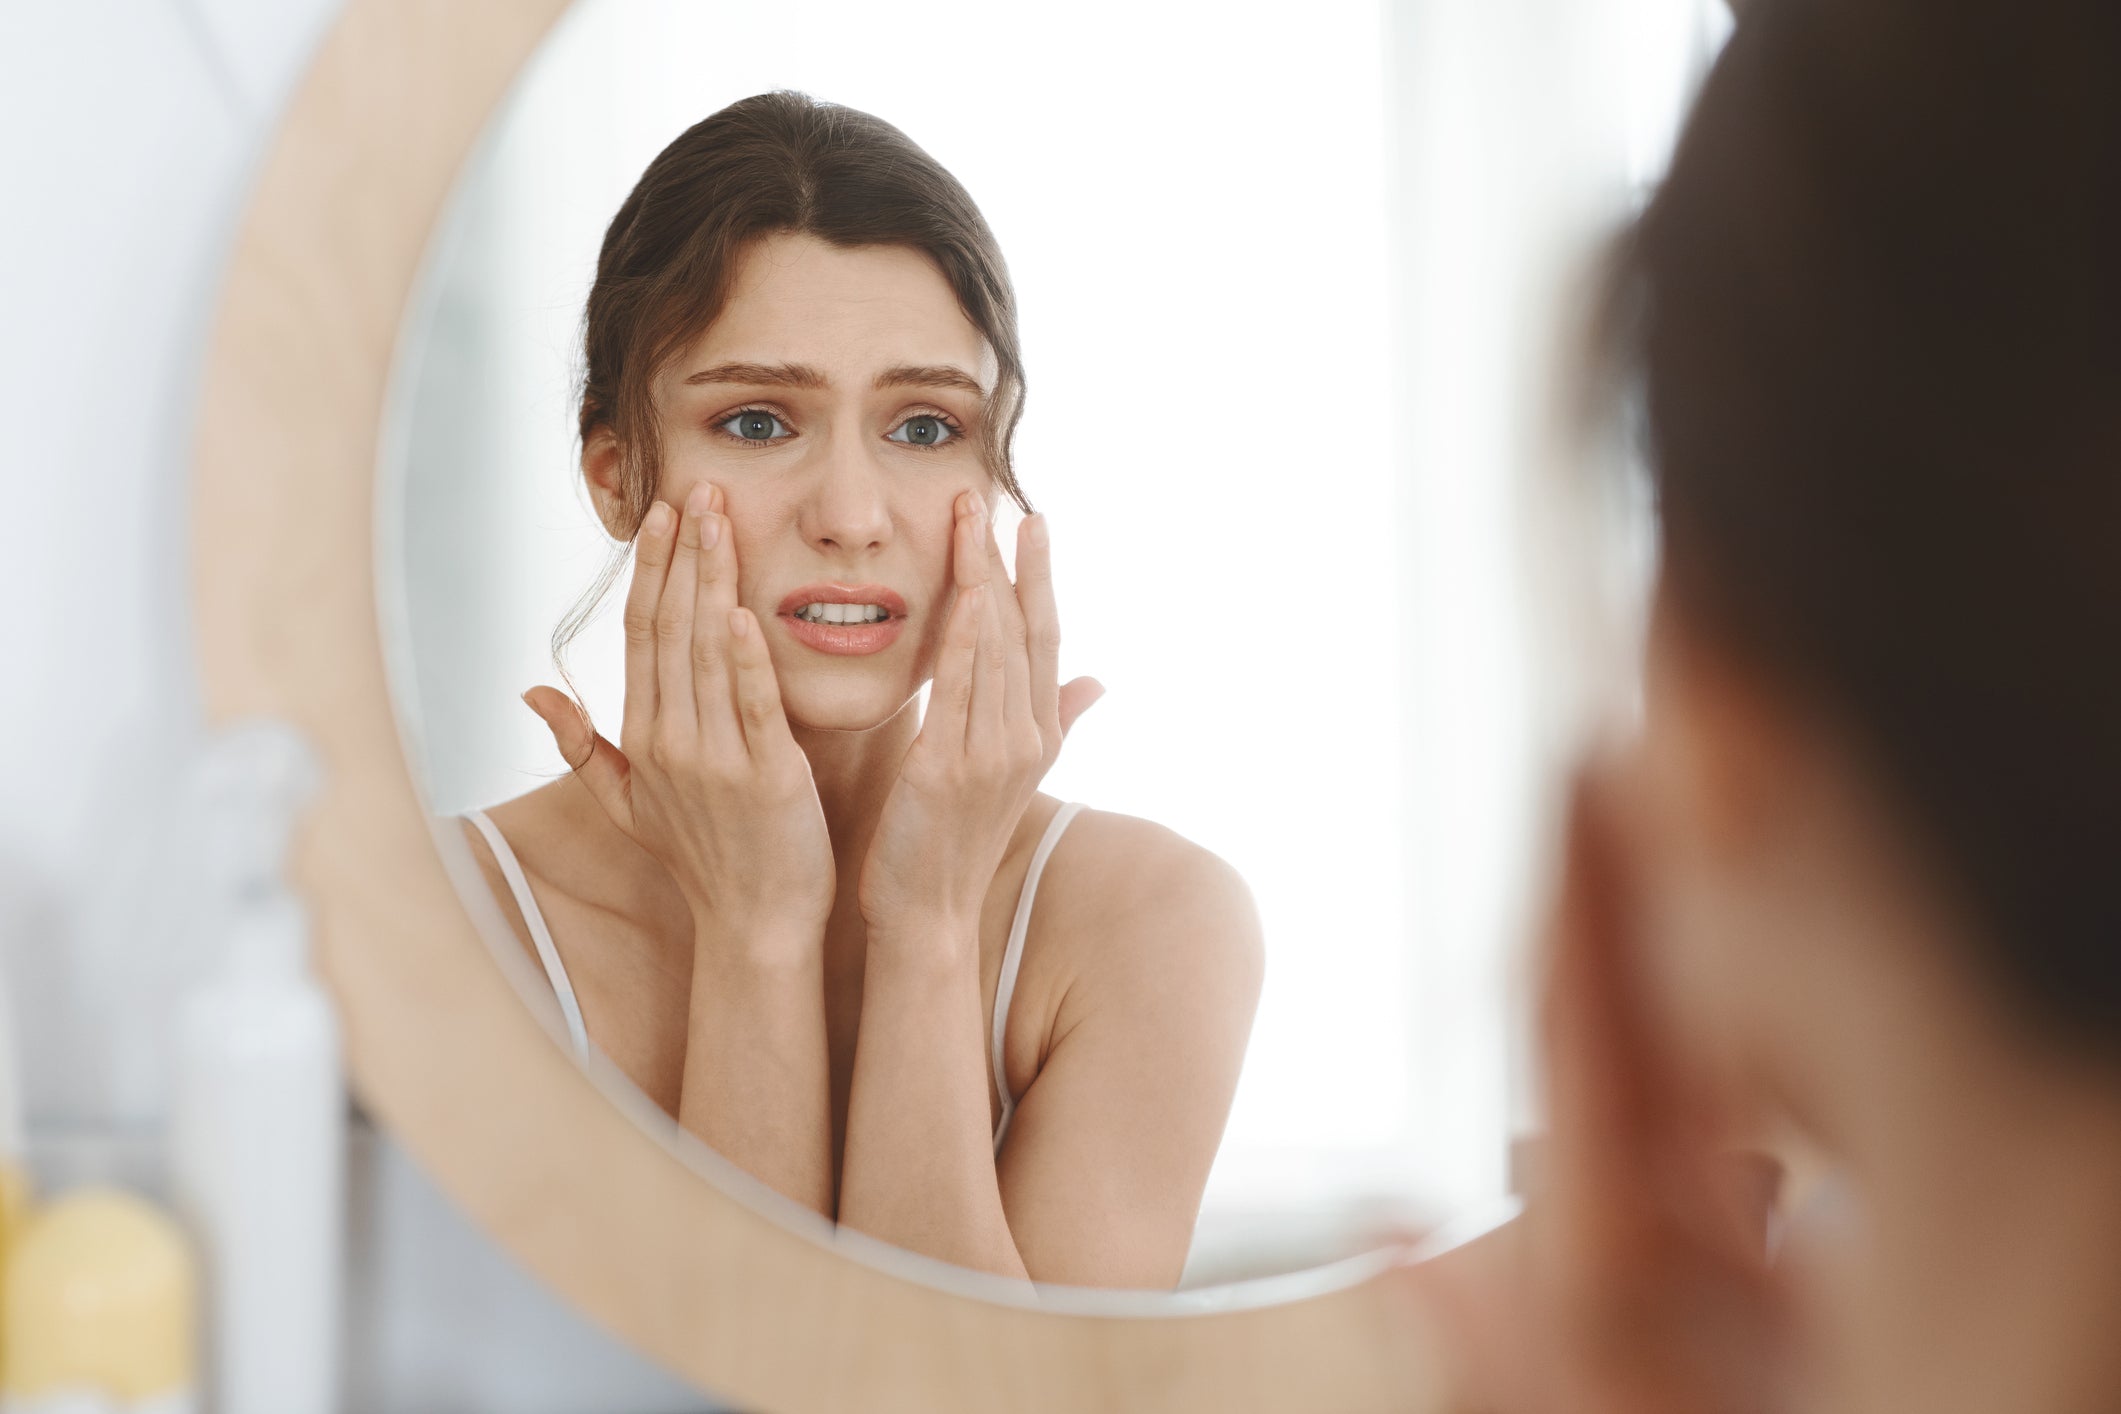 How Acne Affects Self Esteem